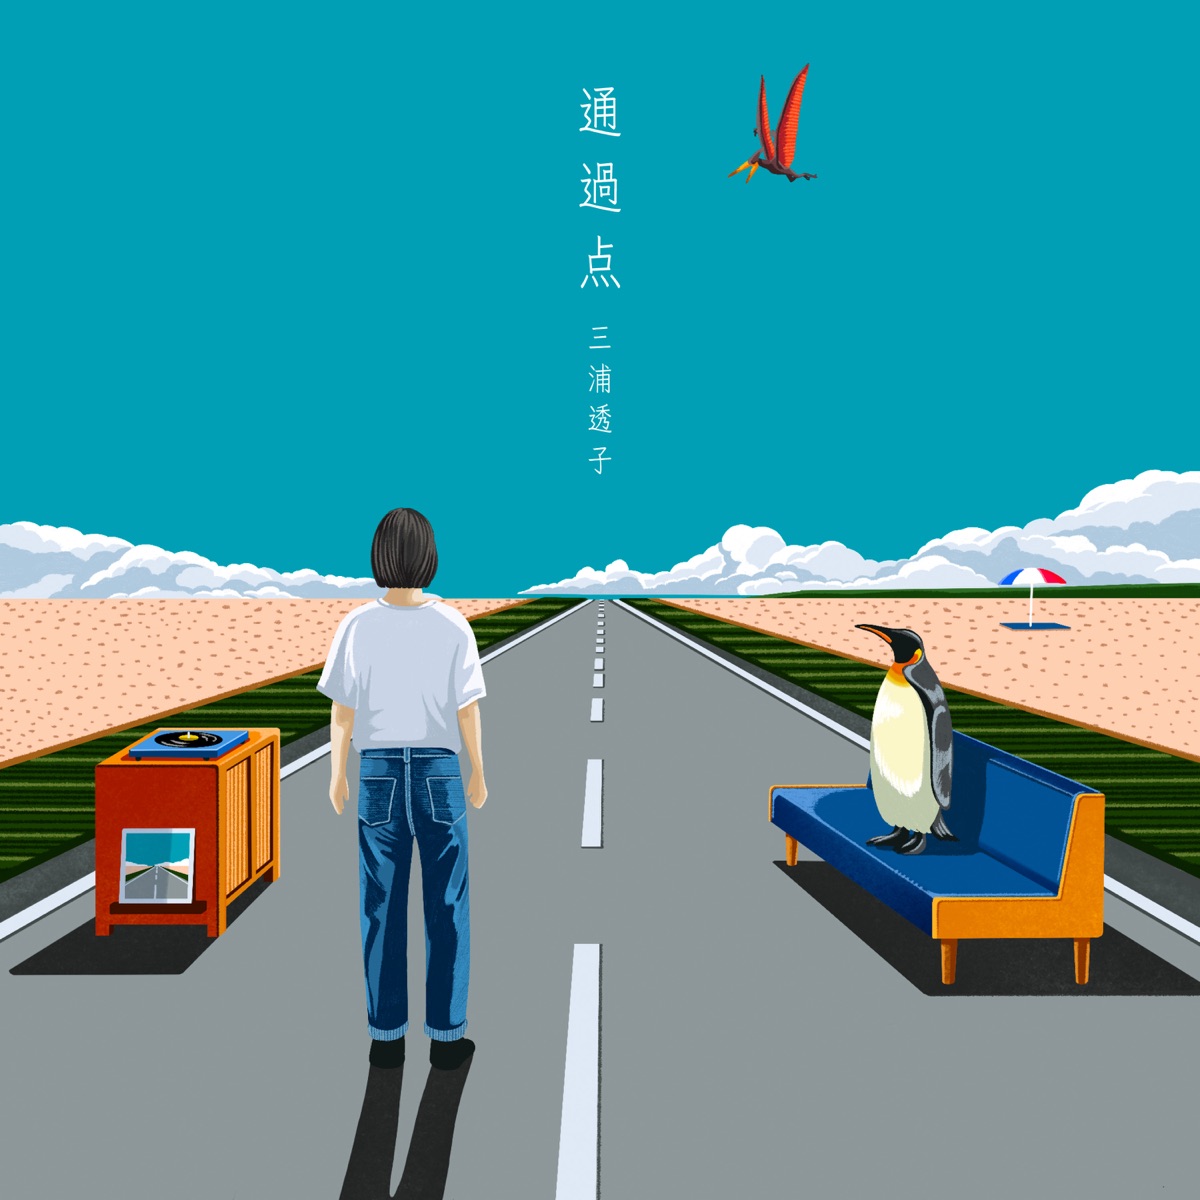 Cover art for『Toko Miura - Tsuukaten』from the release『Tsuukaten』